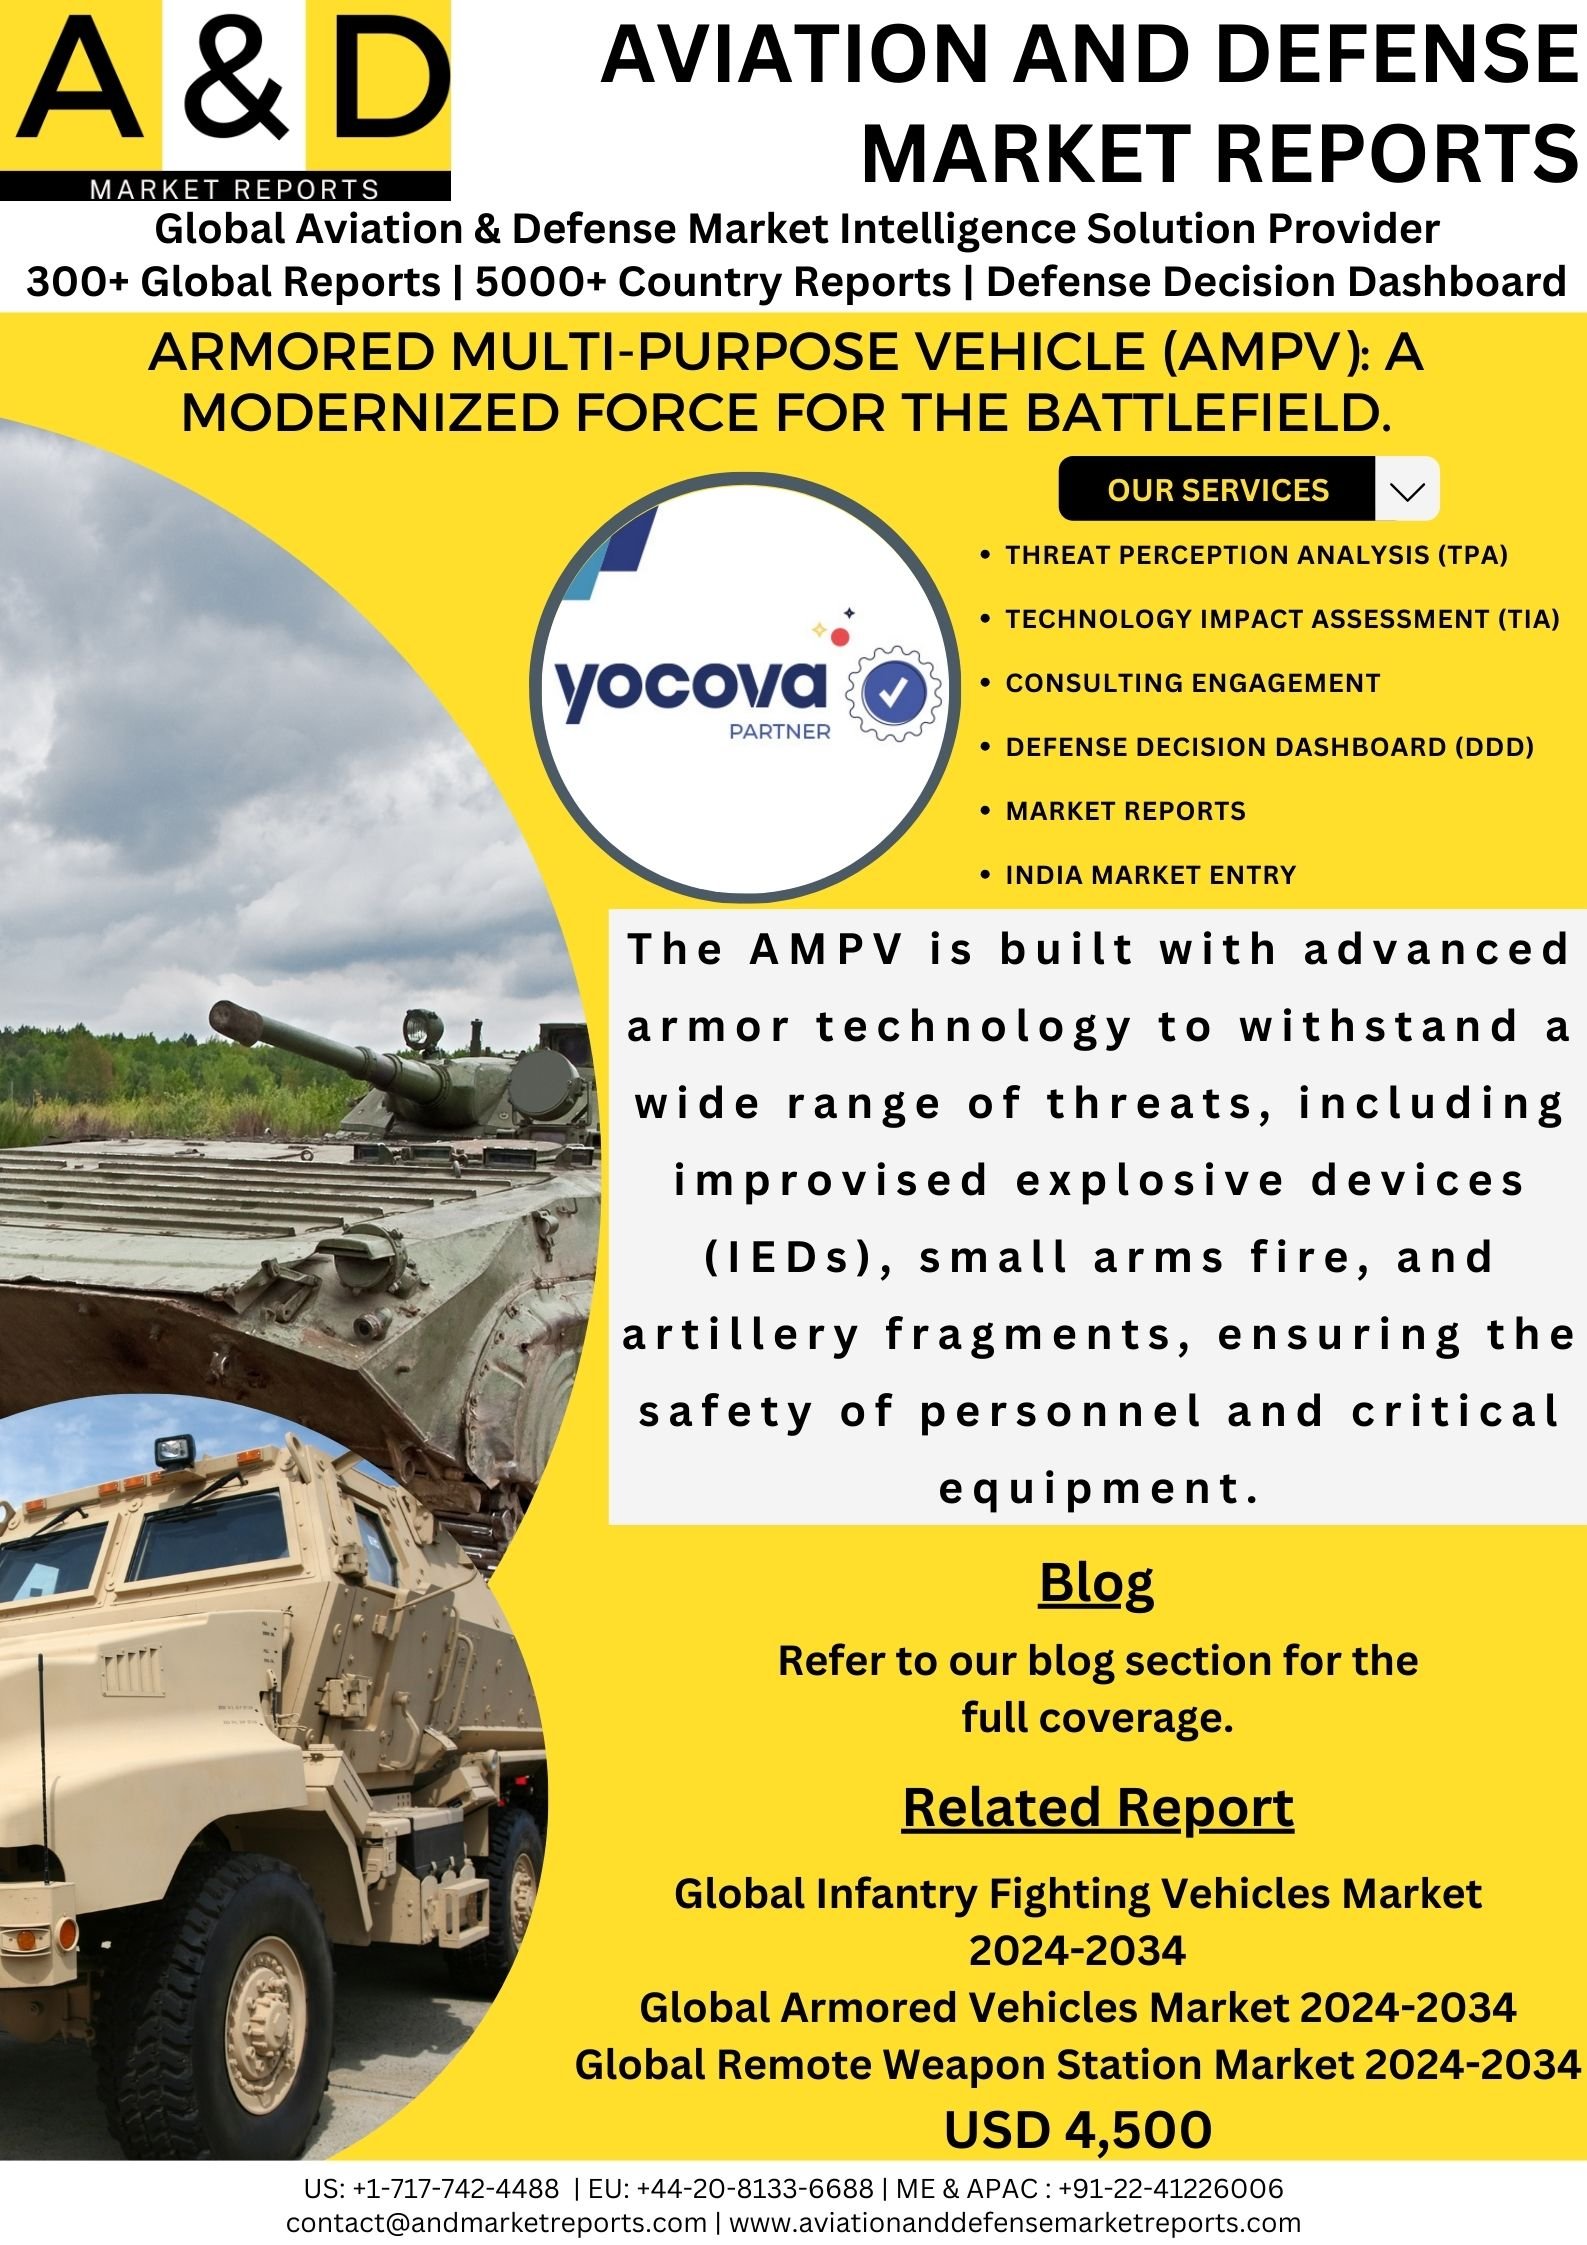 Armored multi-purpose vehicle (AMPV)for modernized warfare